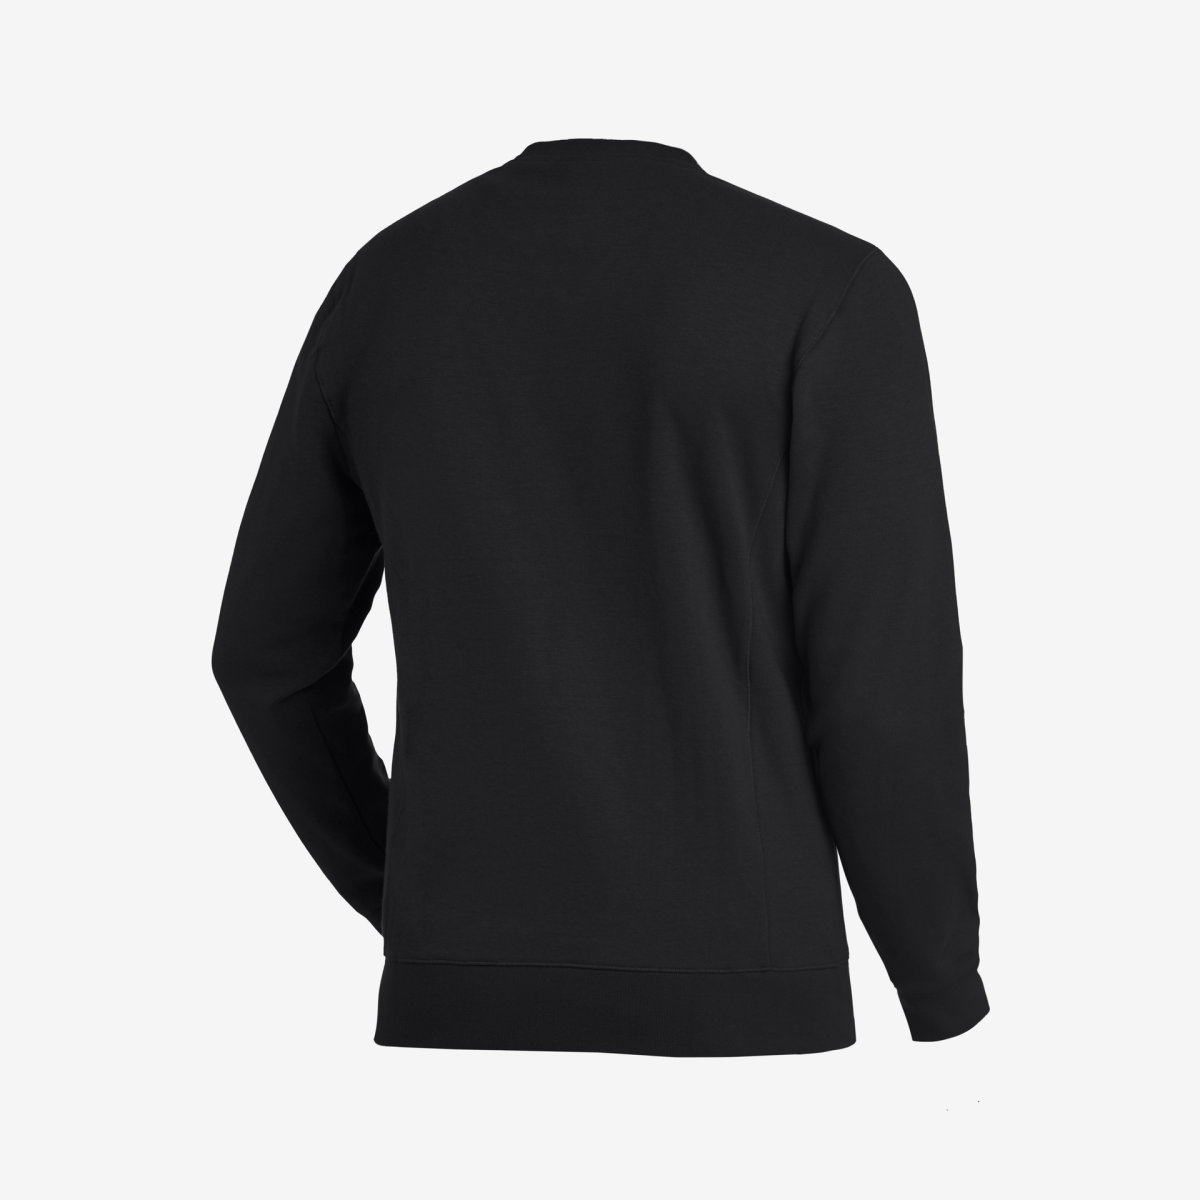 FHB  Sweatshirt  79498  TIMO schwarz  Shirt Sweater Pulli Pullover Crewneck